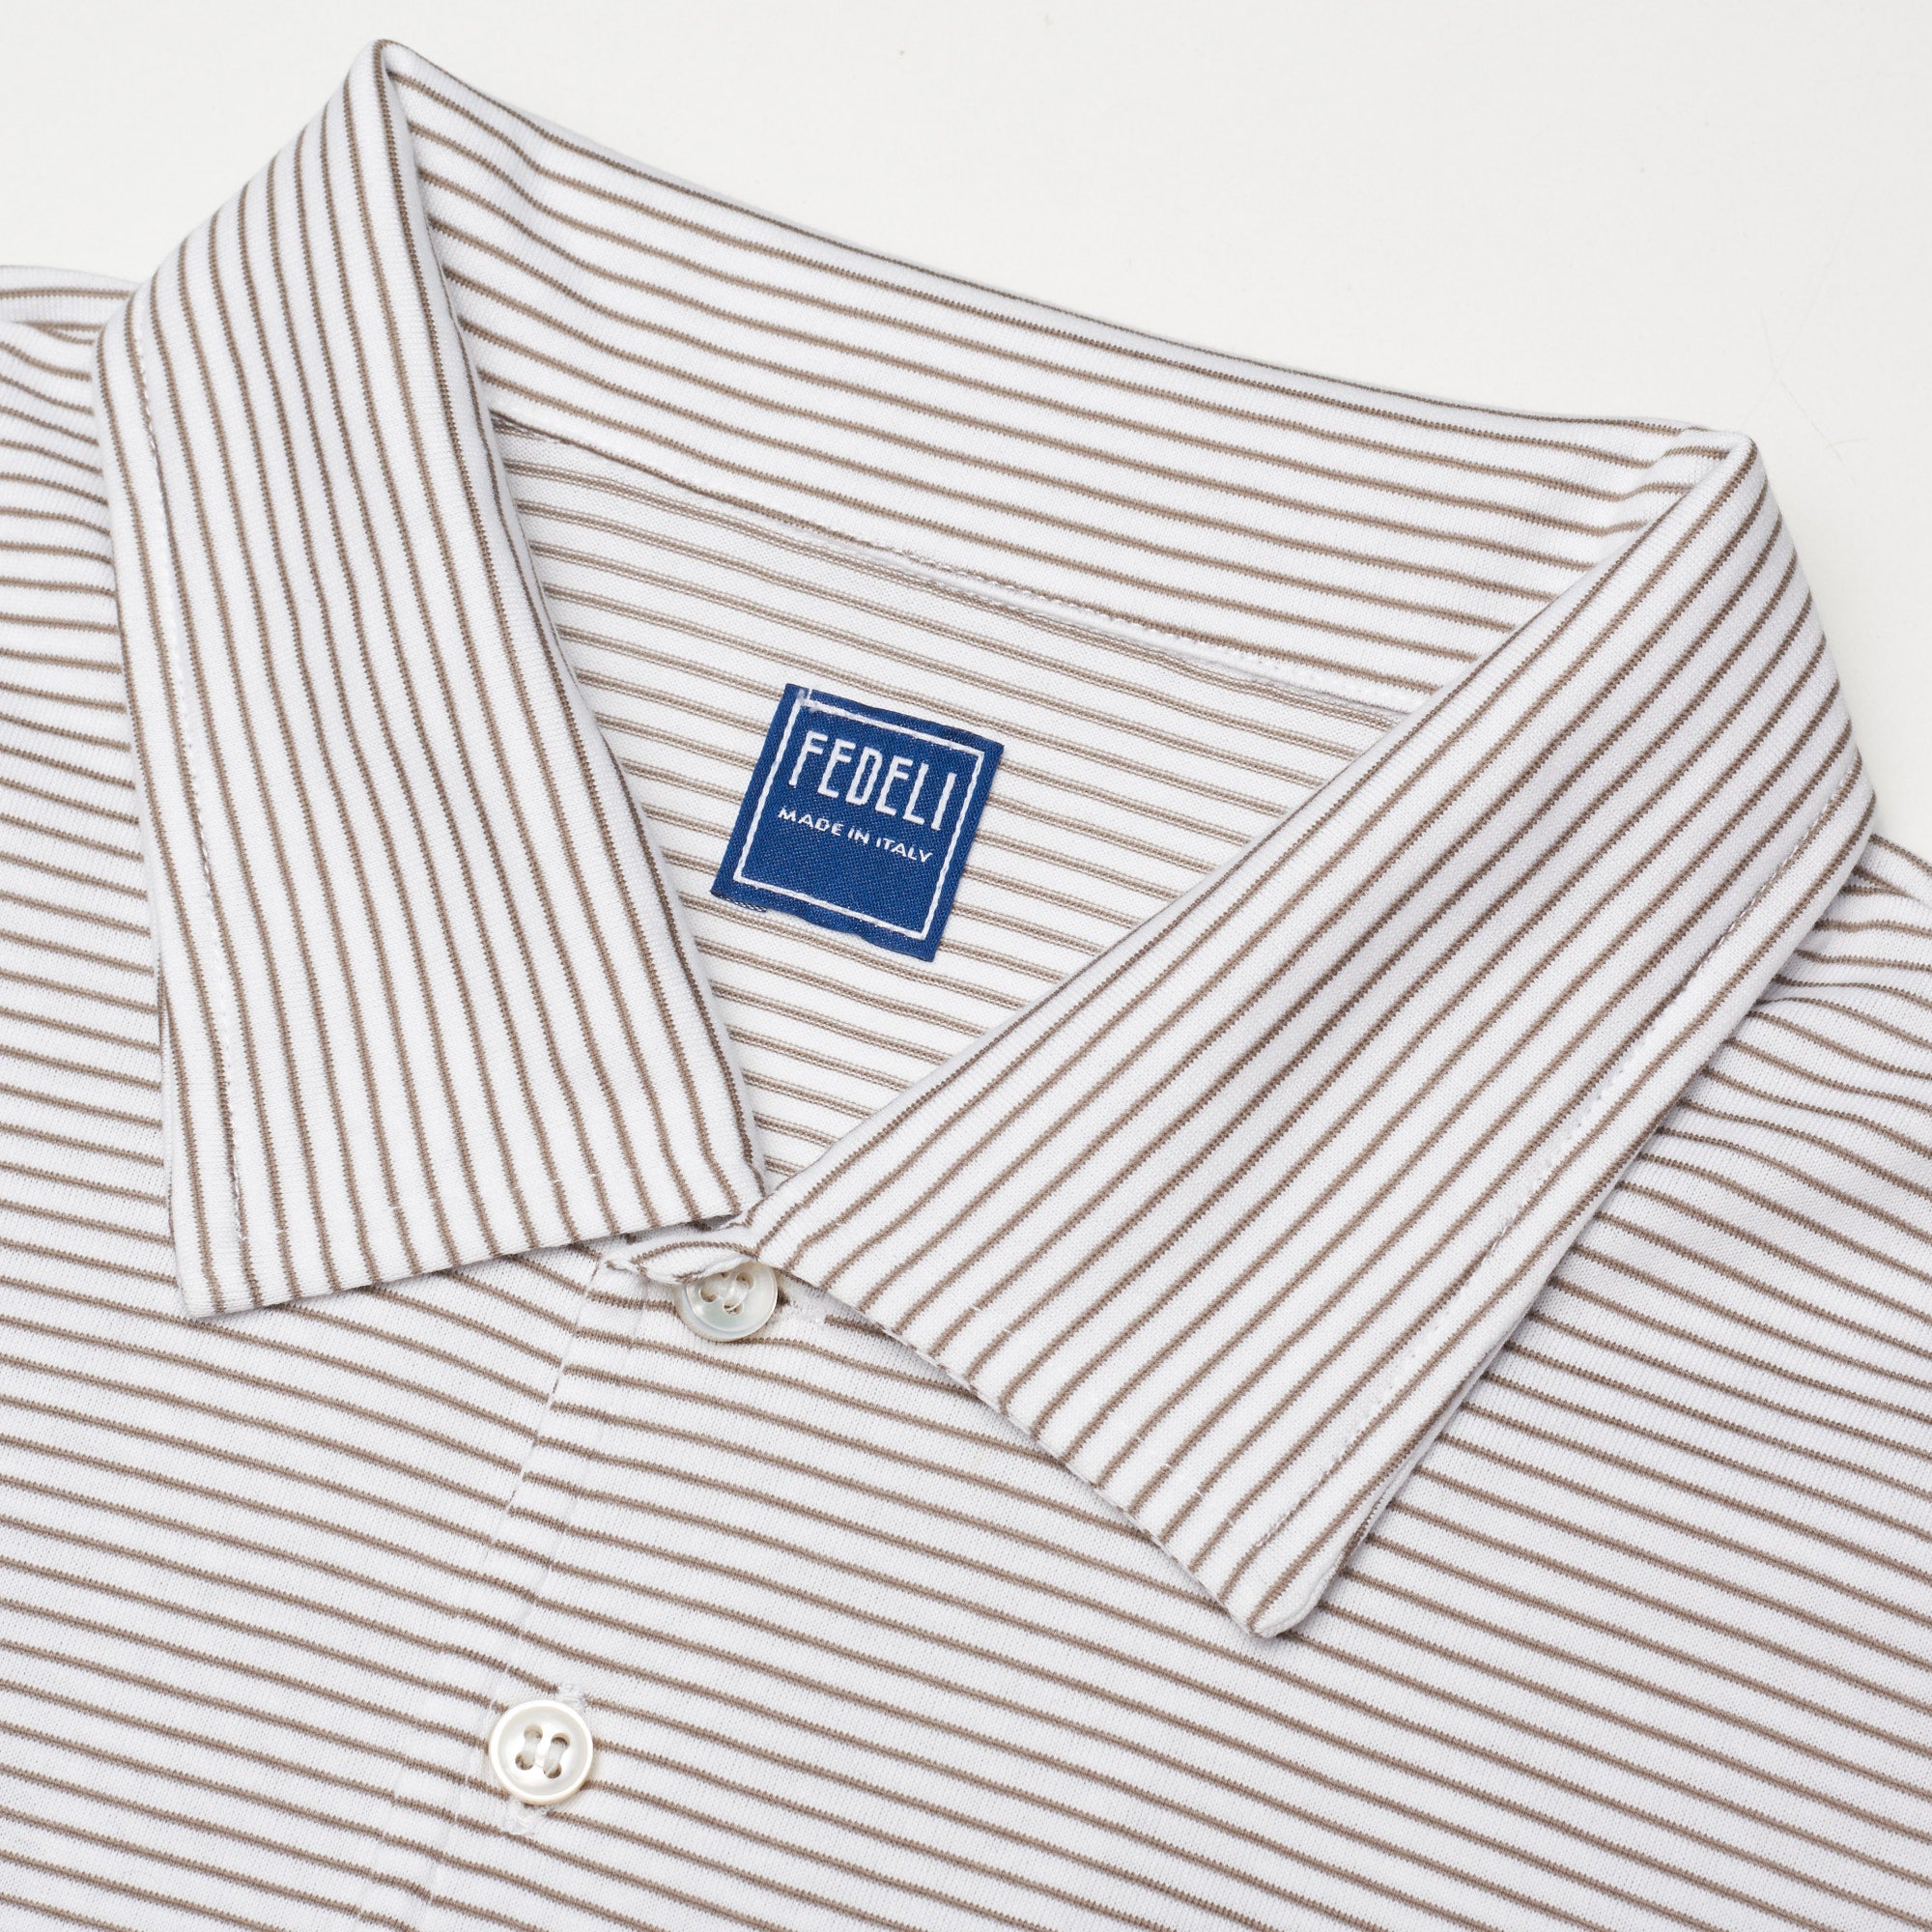 FEDELI "Libeccio" Gray Striped Cotton Jersey Long Sleeve Polo Shirt EU 58 NEW US 3XL FEDELI